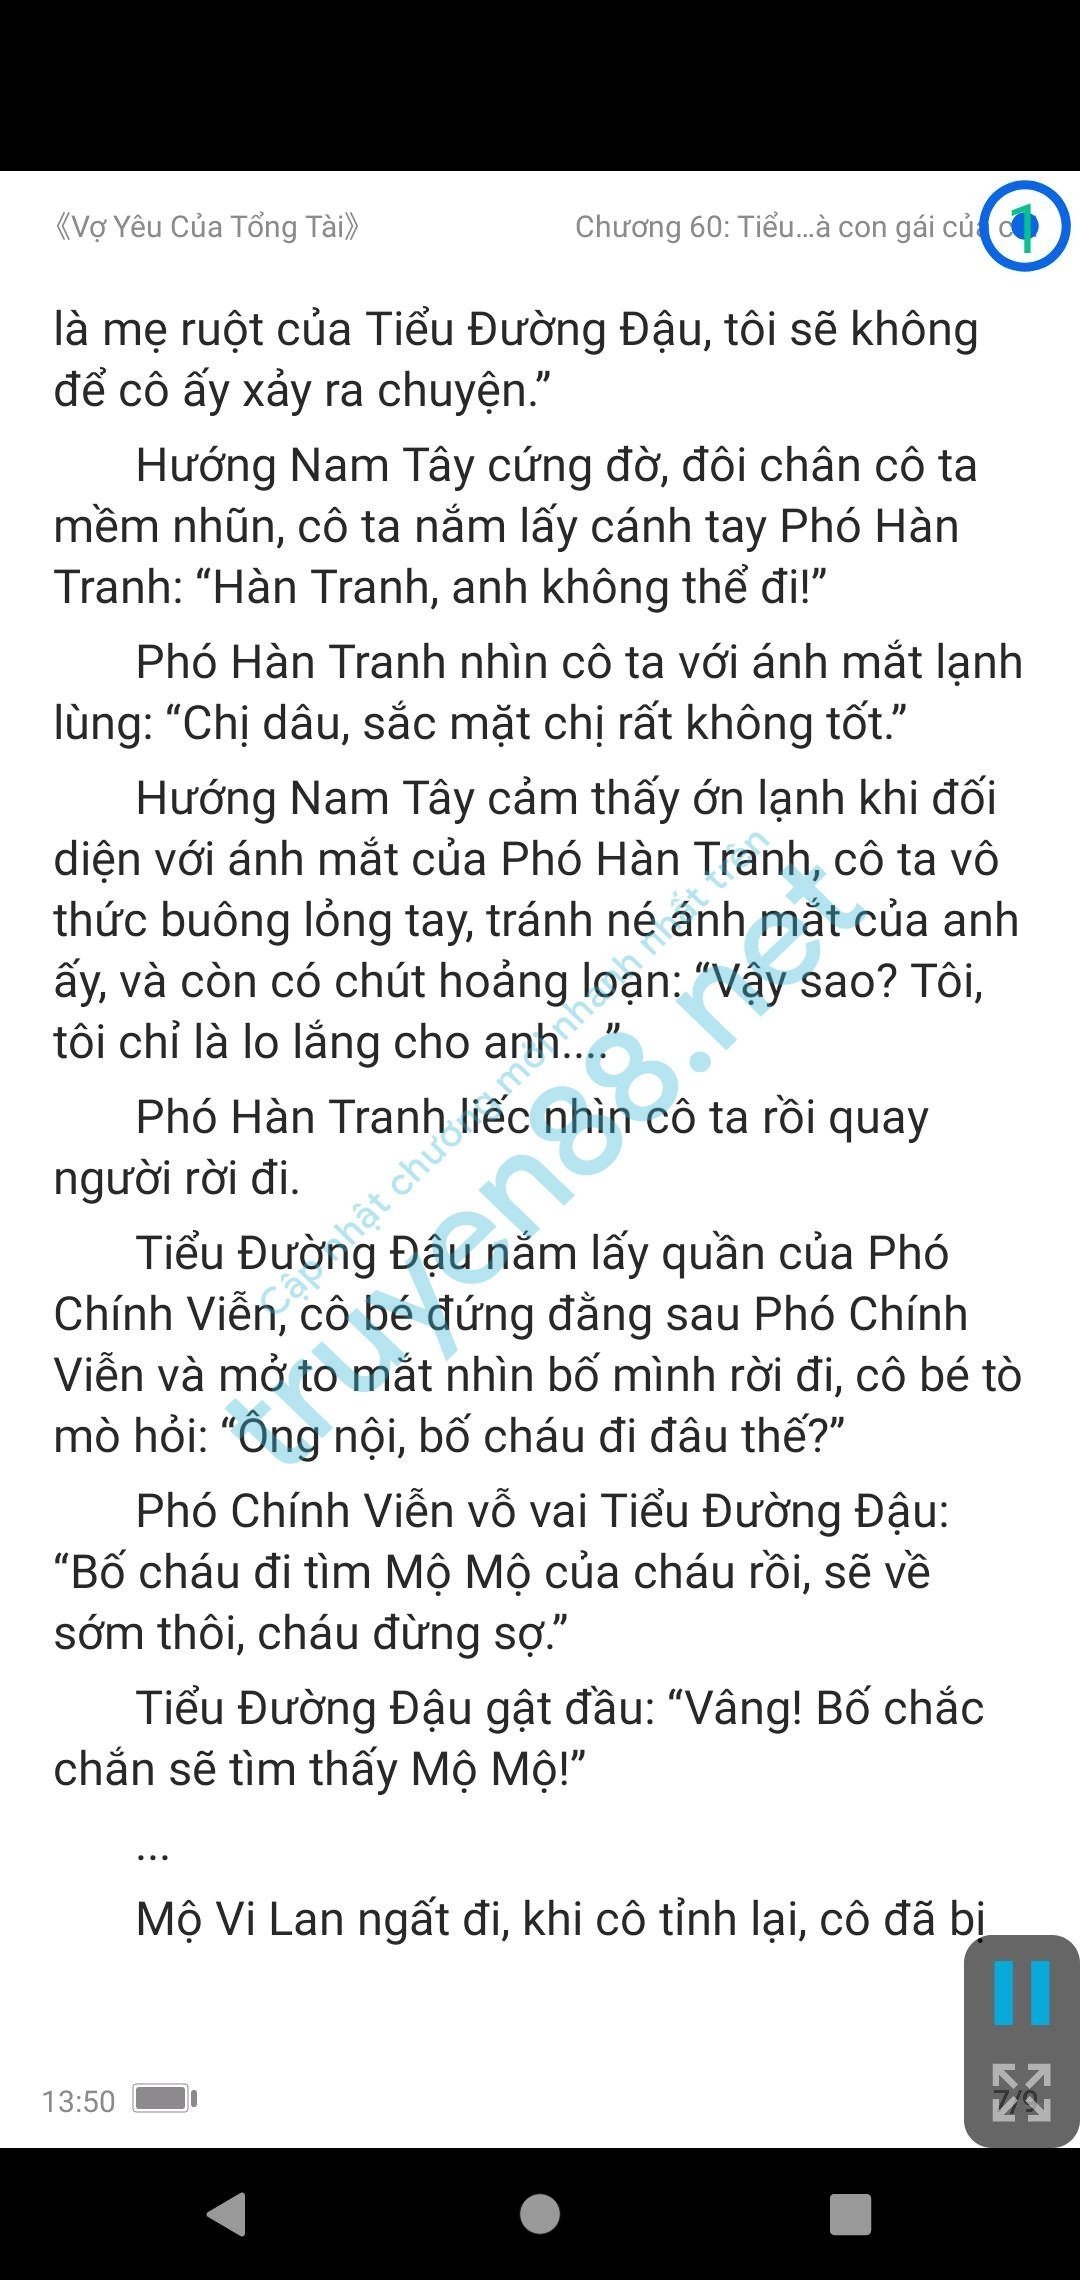 vo-yeu-cua-tong-tai-mo-vi-lan--pho-han-tranh-60-0